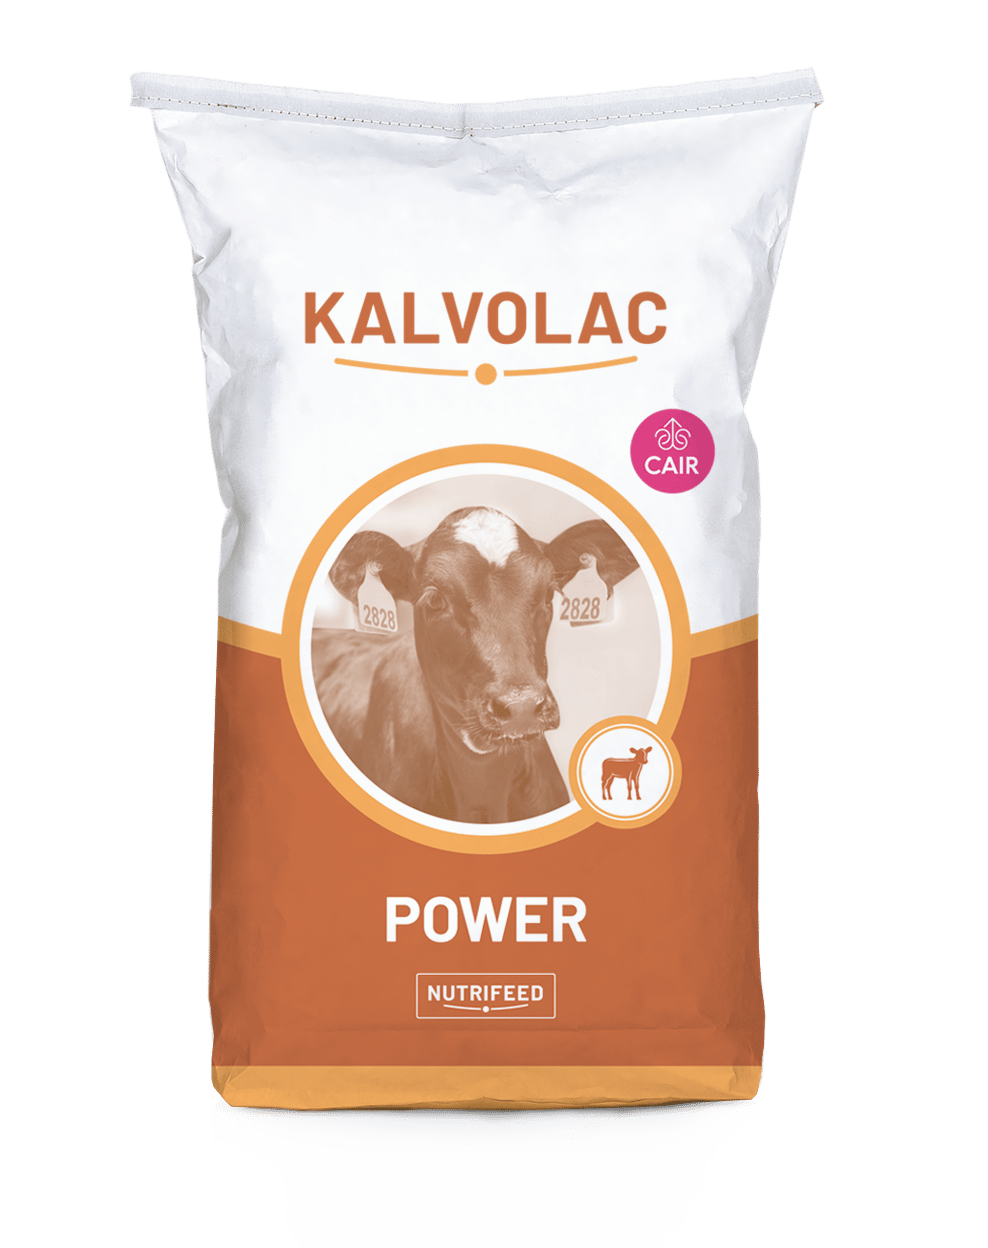 Kalvolac Power CAIR®